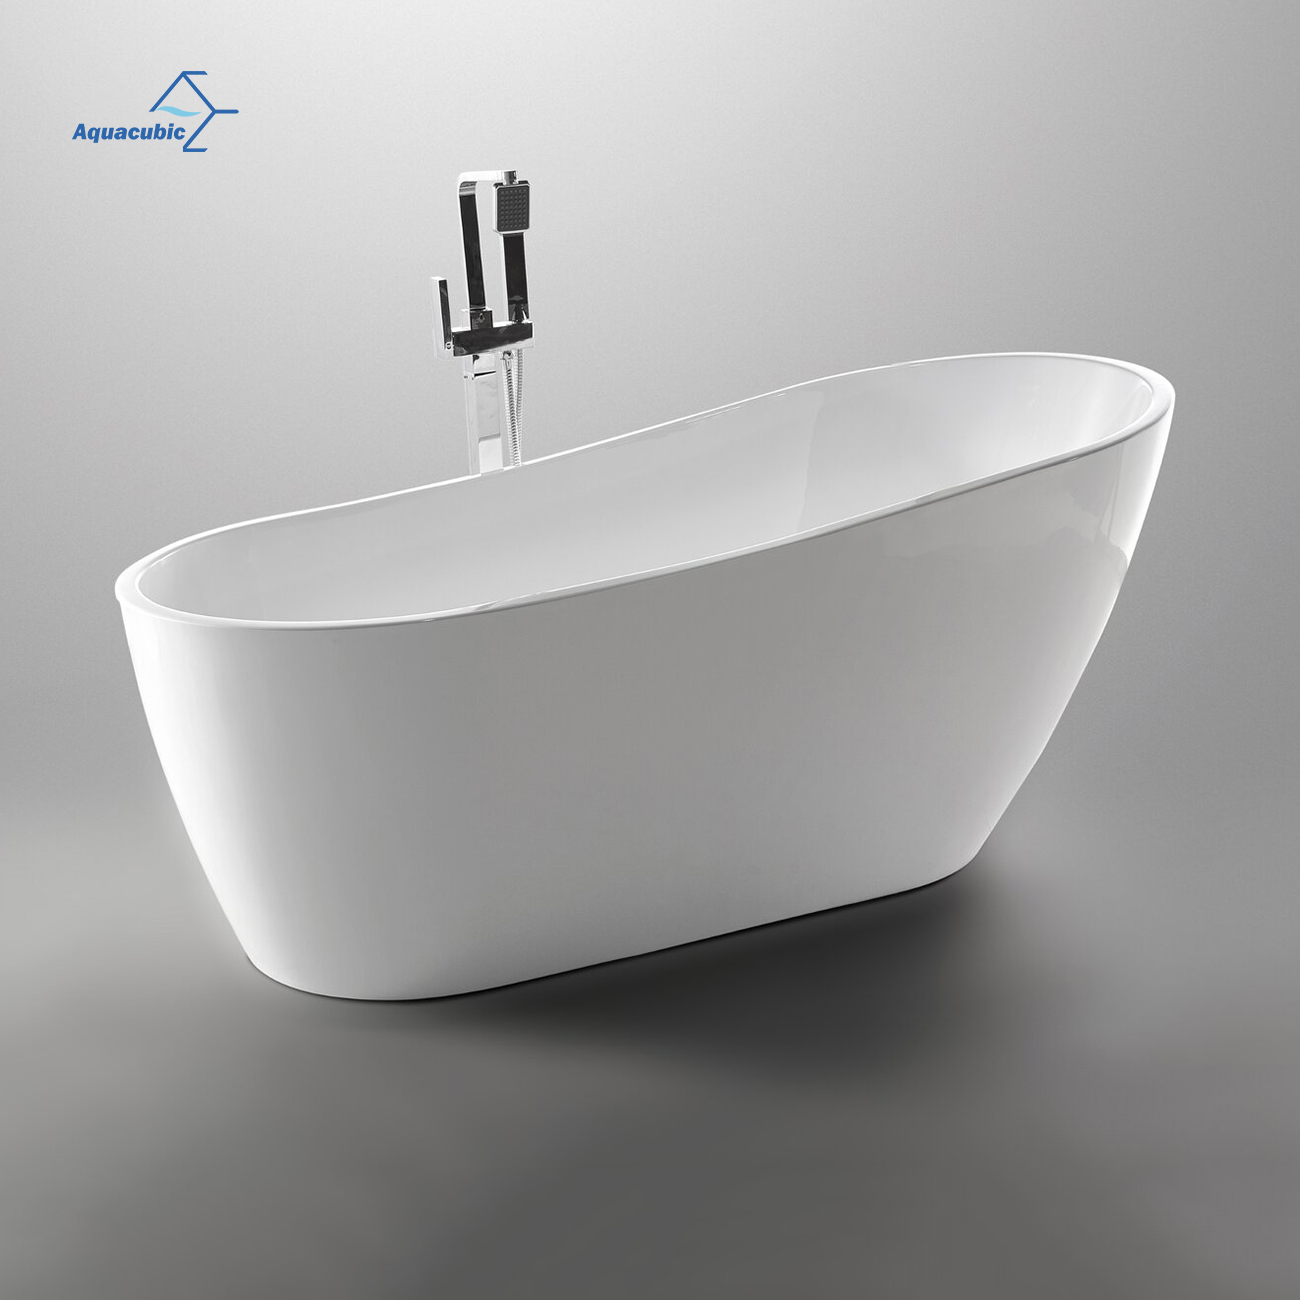 Factory Wholesale cUPC Acrylic Stand-alone Hot Bath Tub Contemporary Soaking Freestanding Bathtub